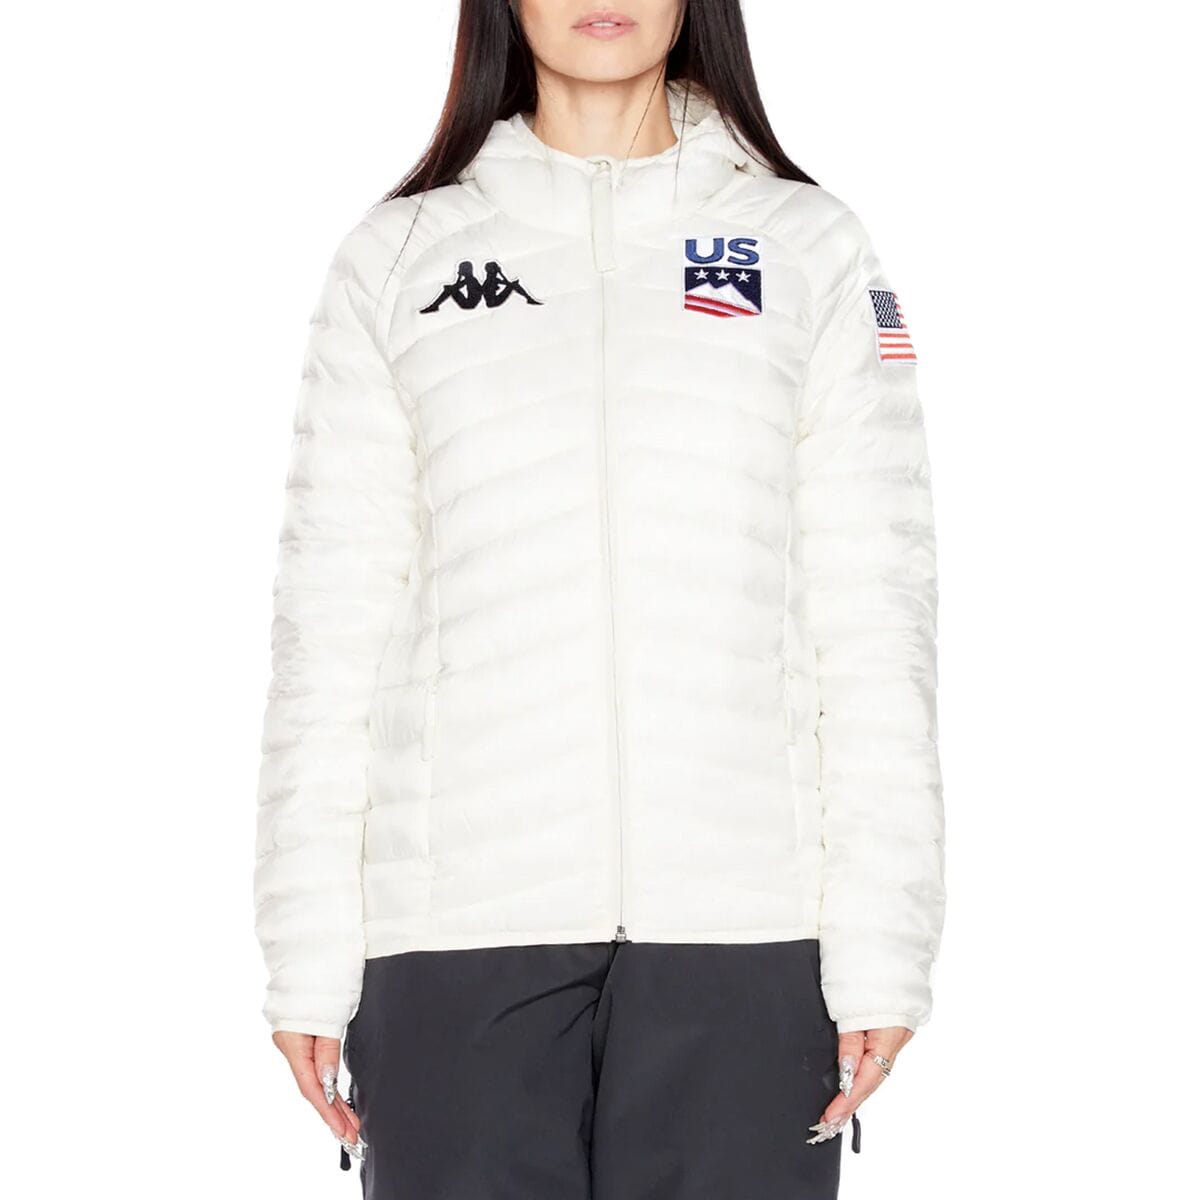 6cento 663 куртка сша Kappa Usa, белый kappa футболка женская kappa размер 50